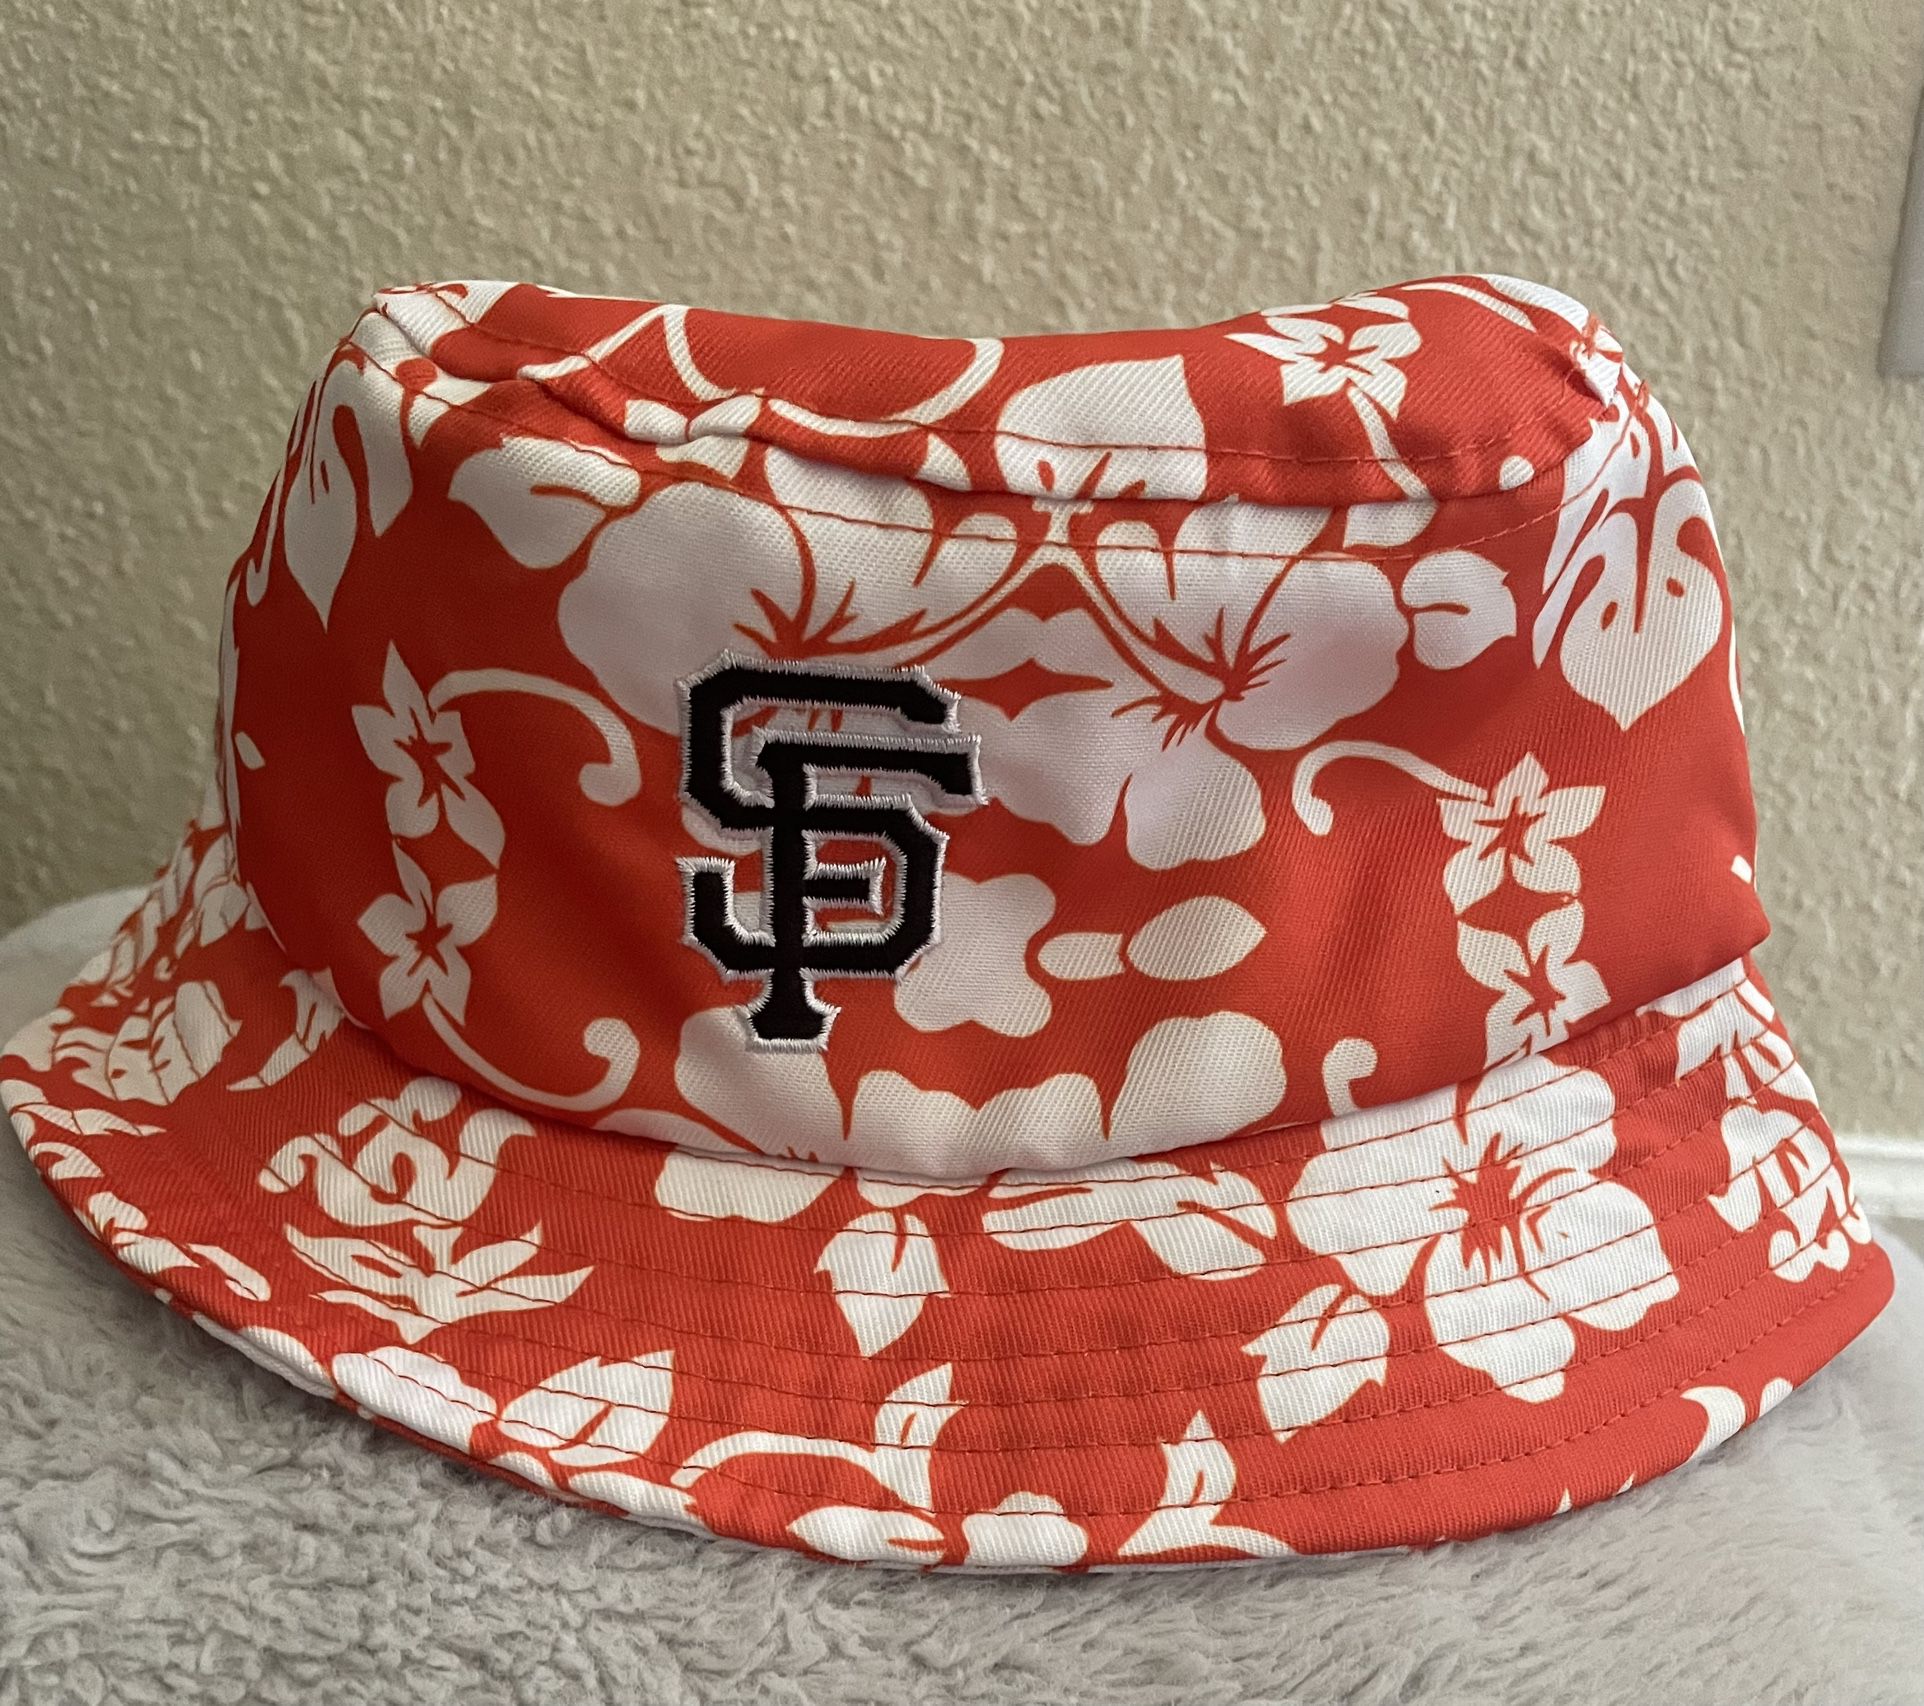 SF Giants bucket hat for Sale in Stockton, CA - OfferUp